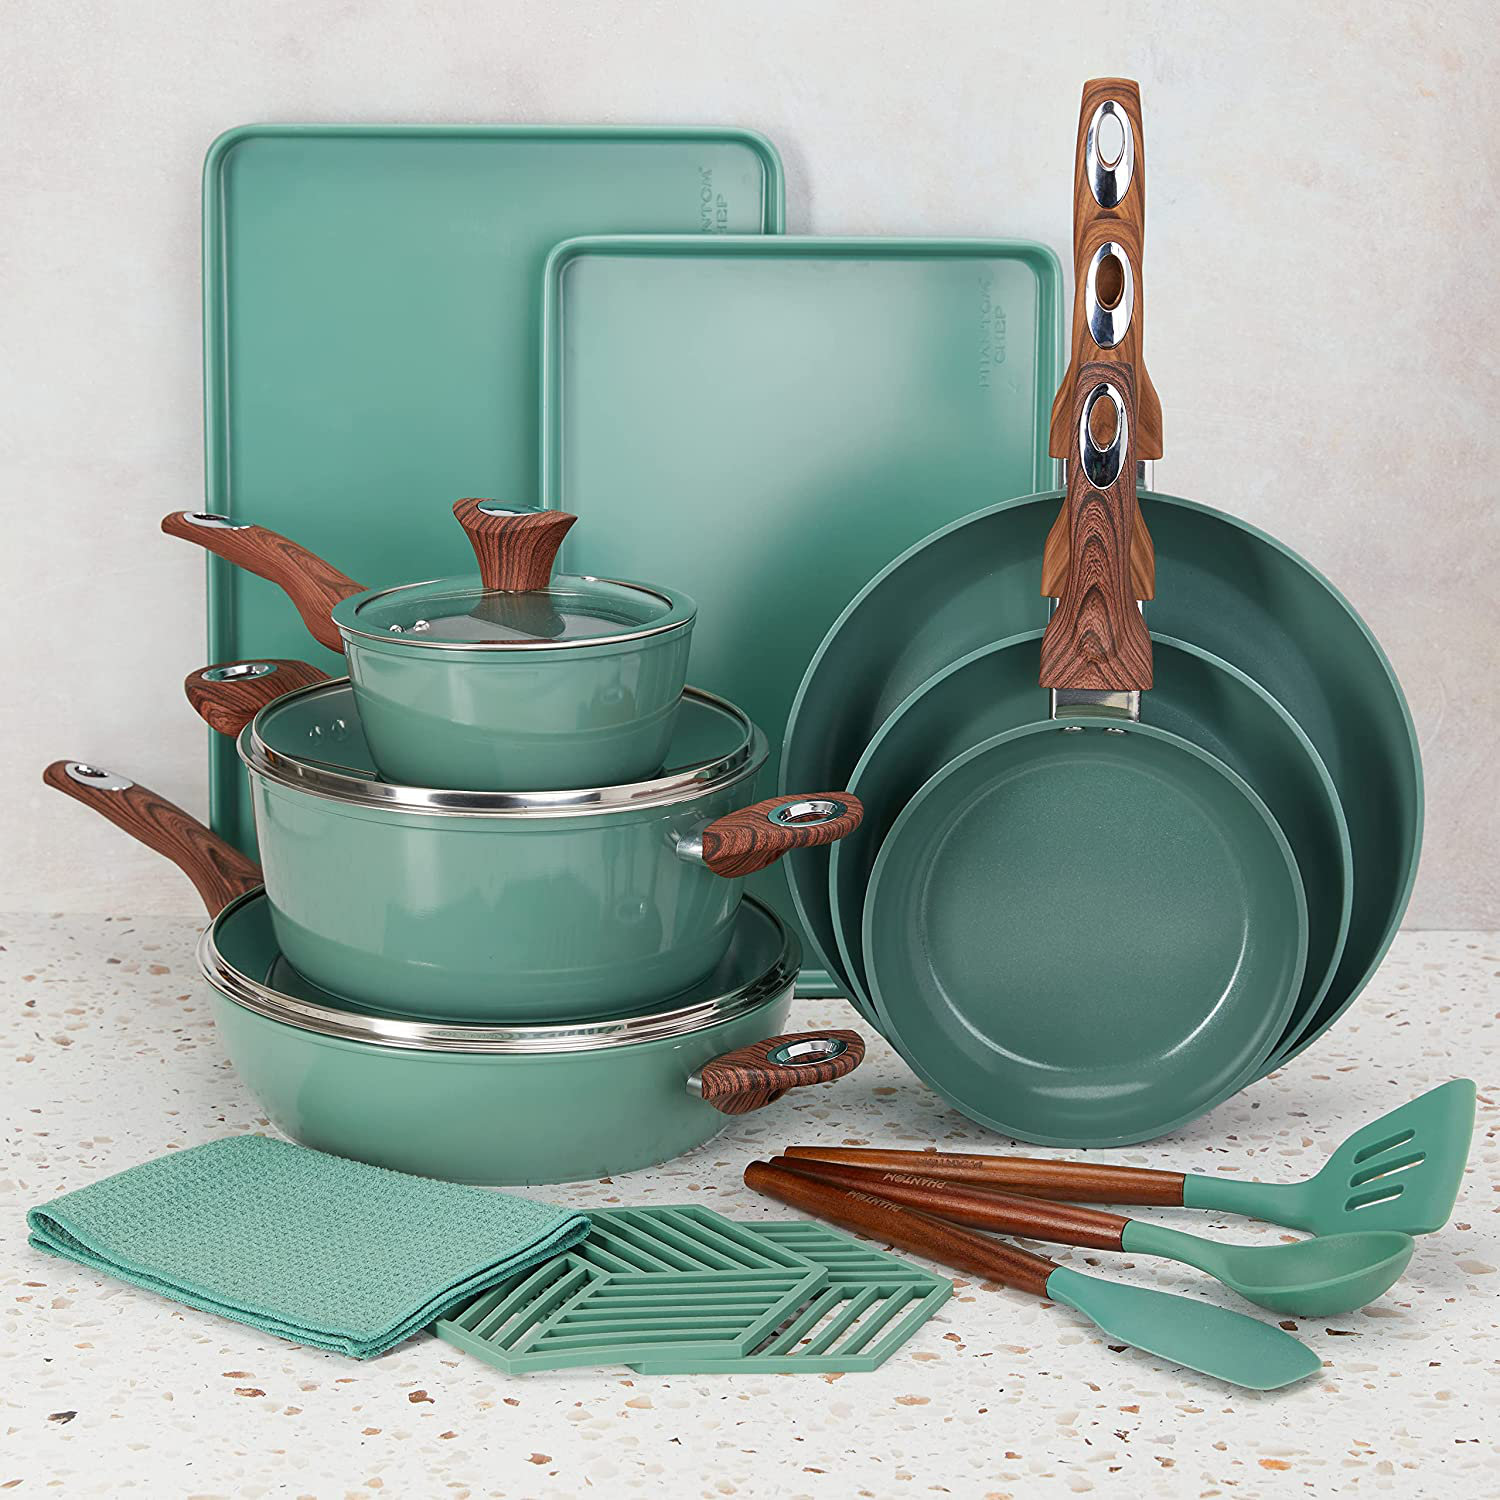 Ceramic Pots and Pans Set - Nonstick Cookware Sets Non Toxic Cookware Set,  PFOA